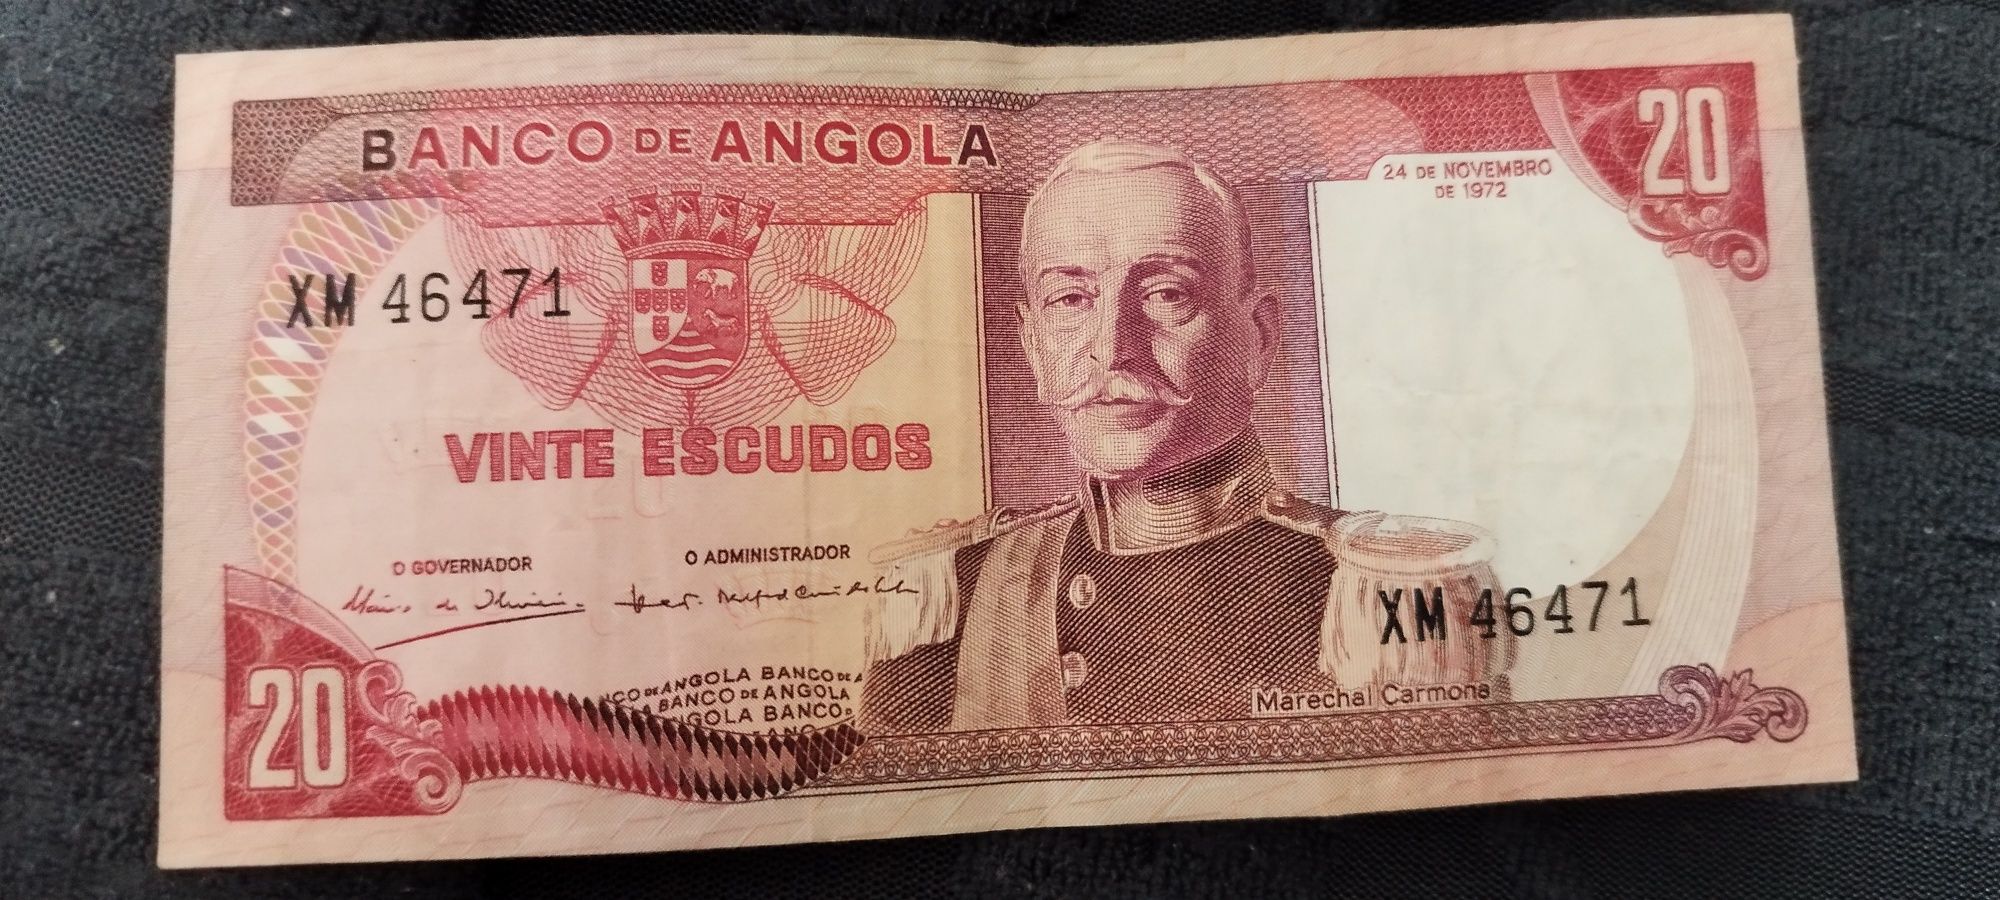 Notas antigas de Angola.